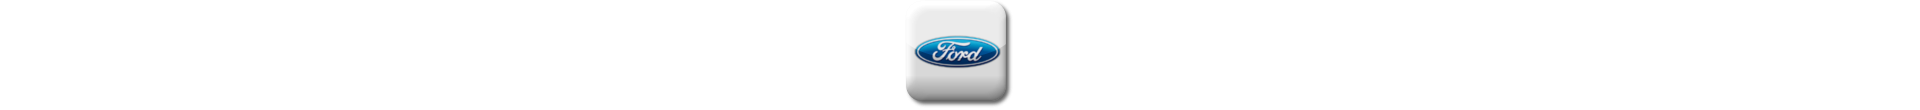 Boitier additionnel Ford Diesel Evolussem